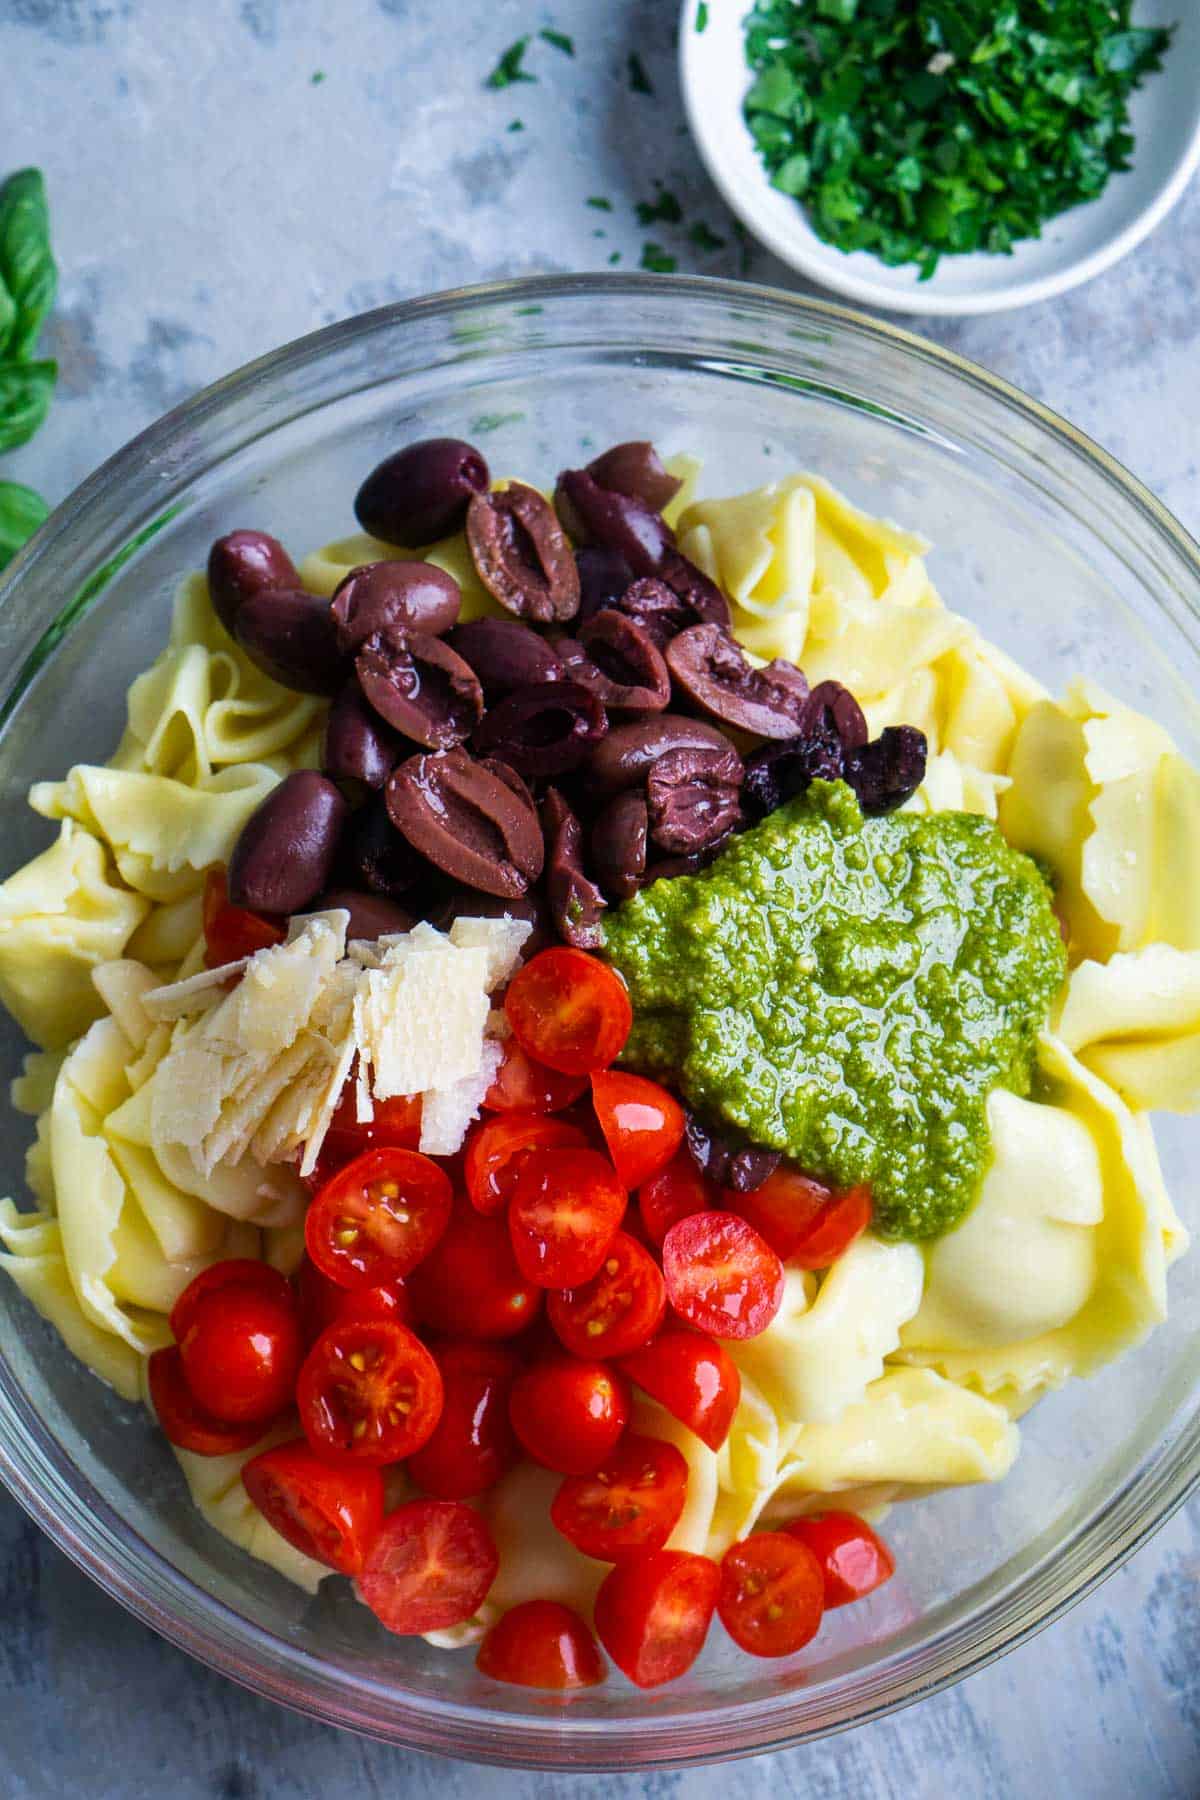 pesto tortellini pasta salad ingredients in glass bowl before tossing